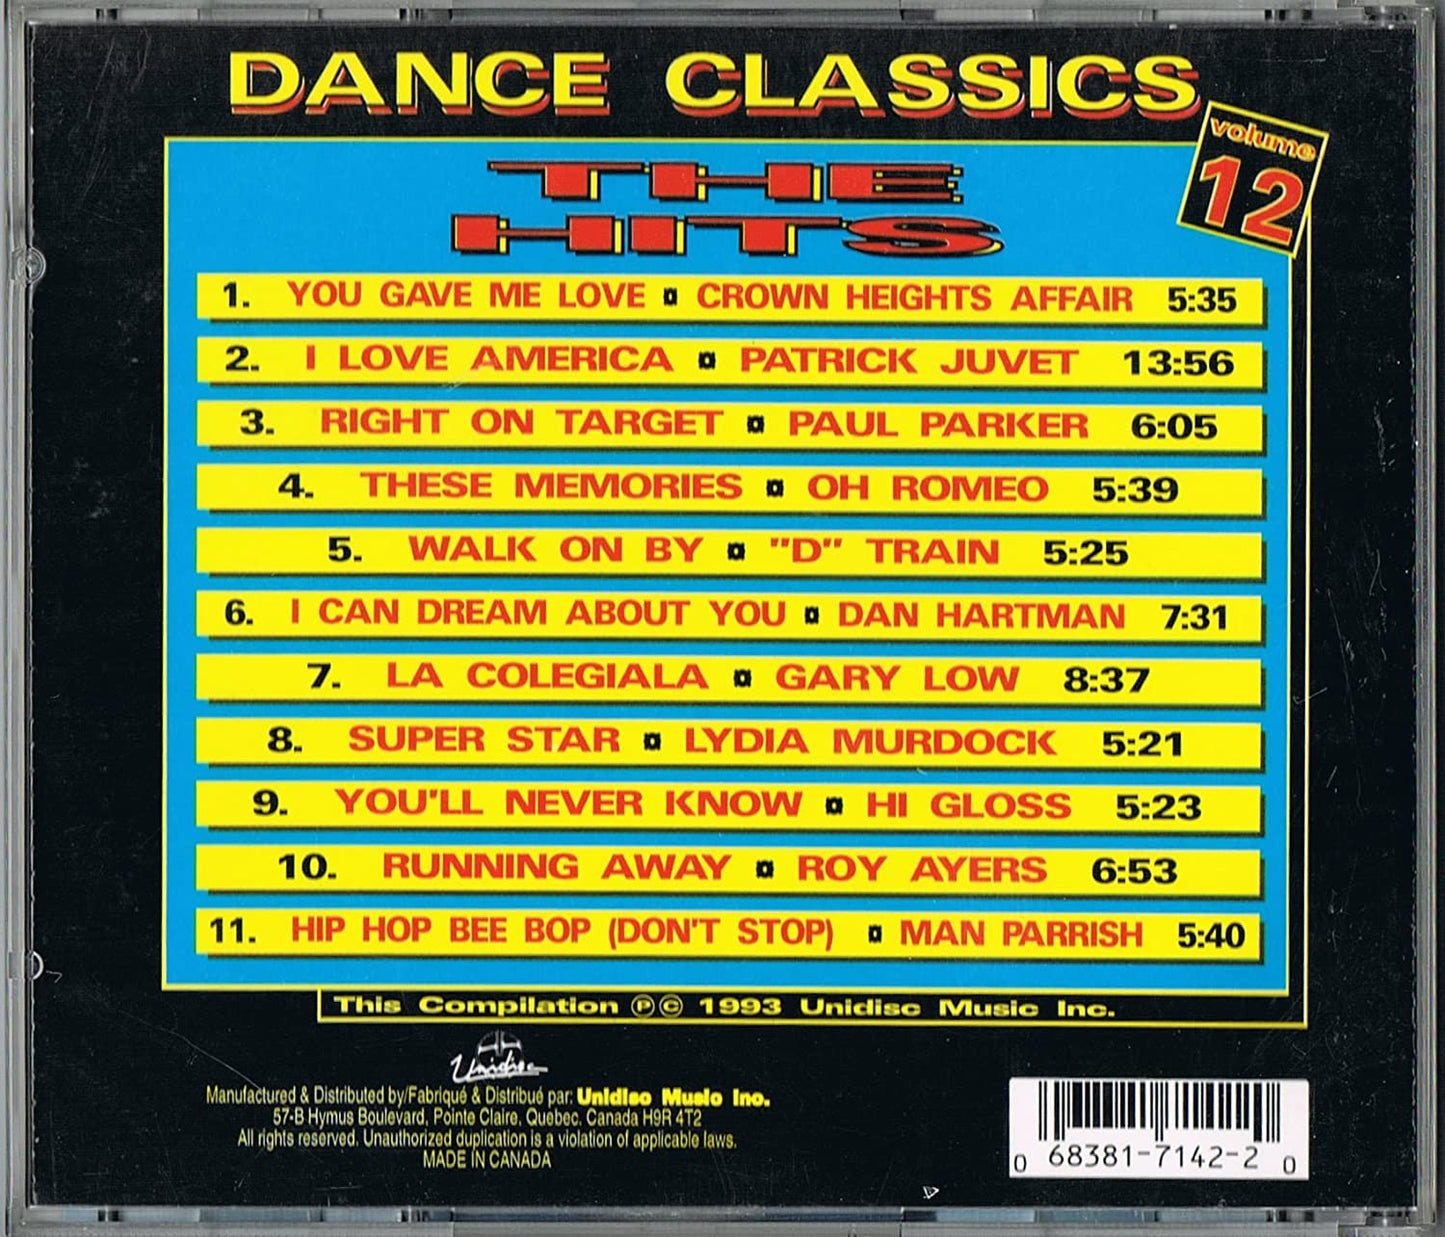 Dance Classics Hits 12 [Audio CD] Various Artists